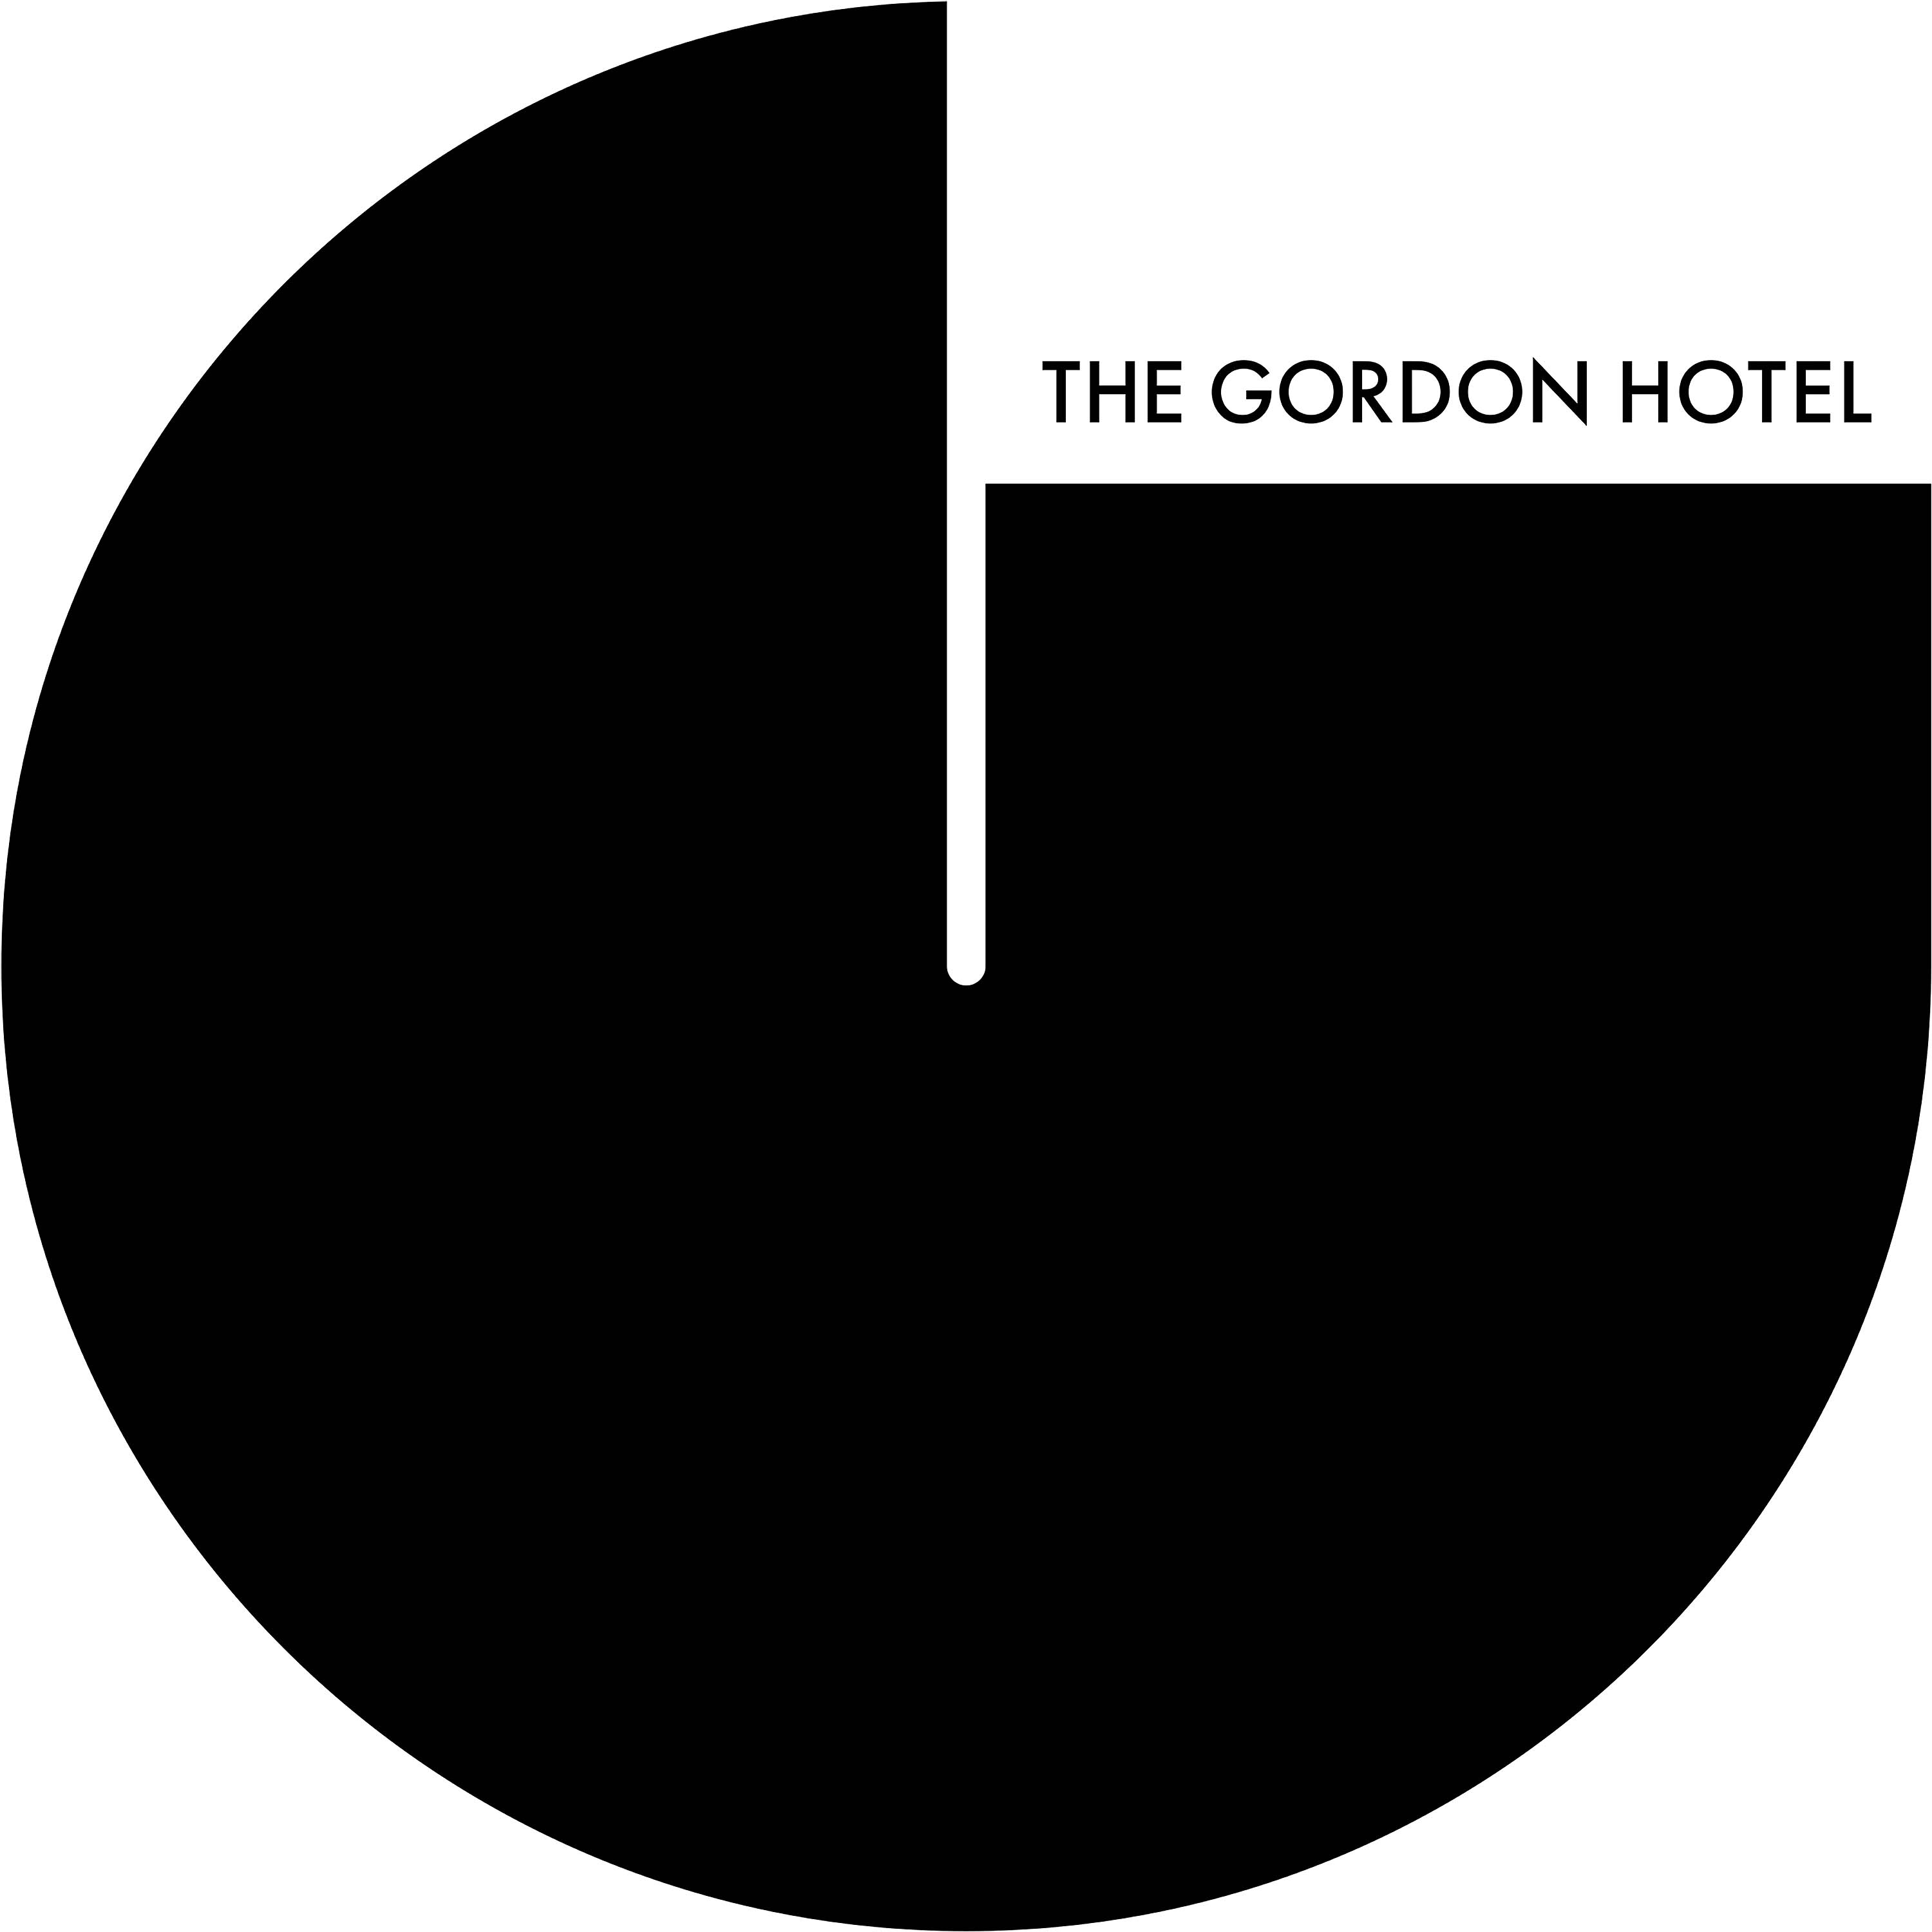 The Gordon Hotel